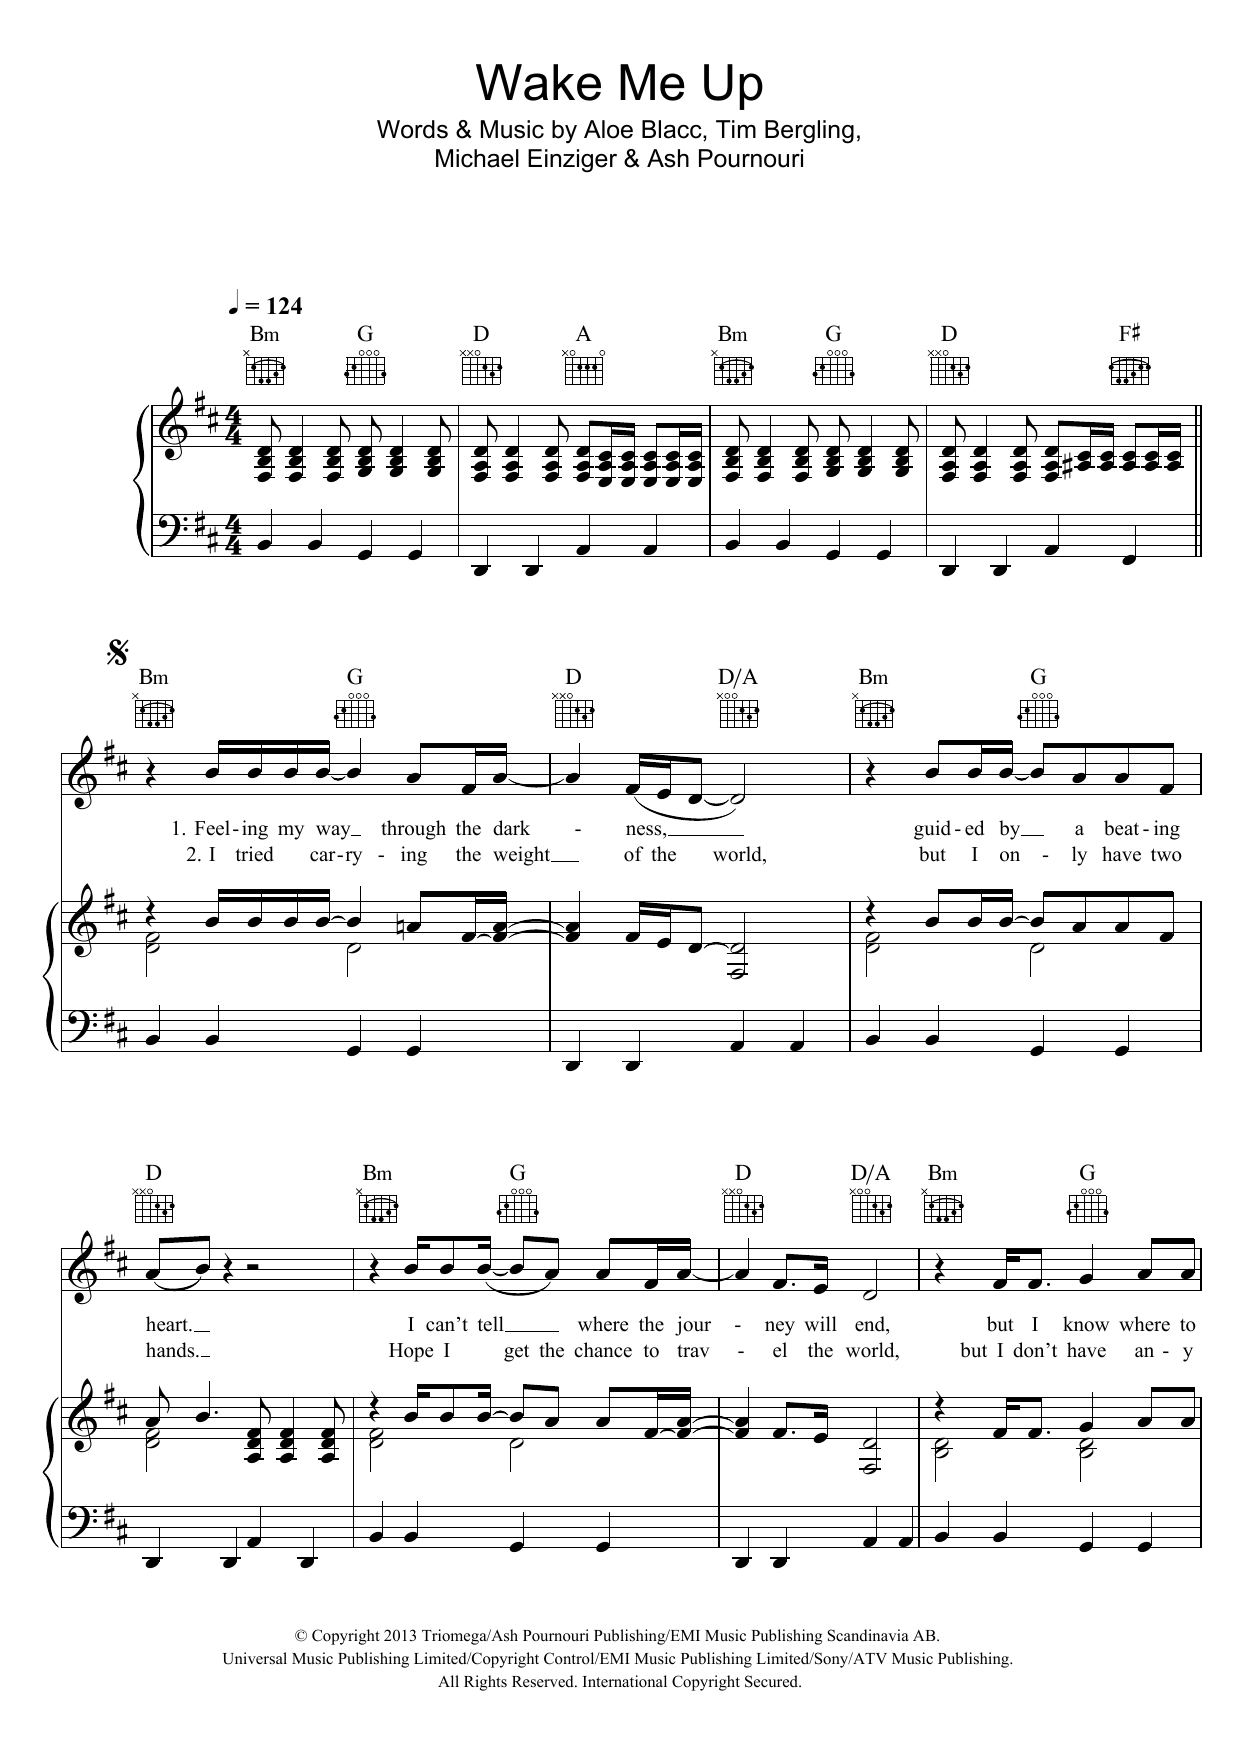 Avicii Wake Me Up Sheet Music Notes & Chords for Ukulele - Download or Print PDF